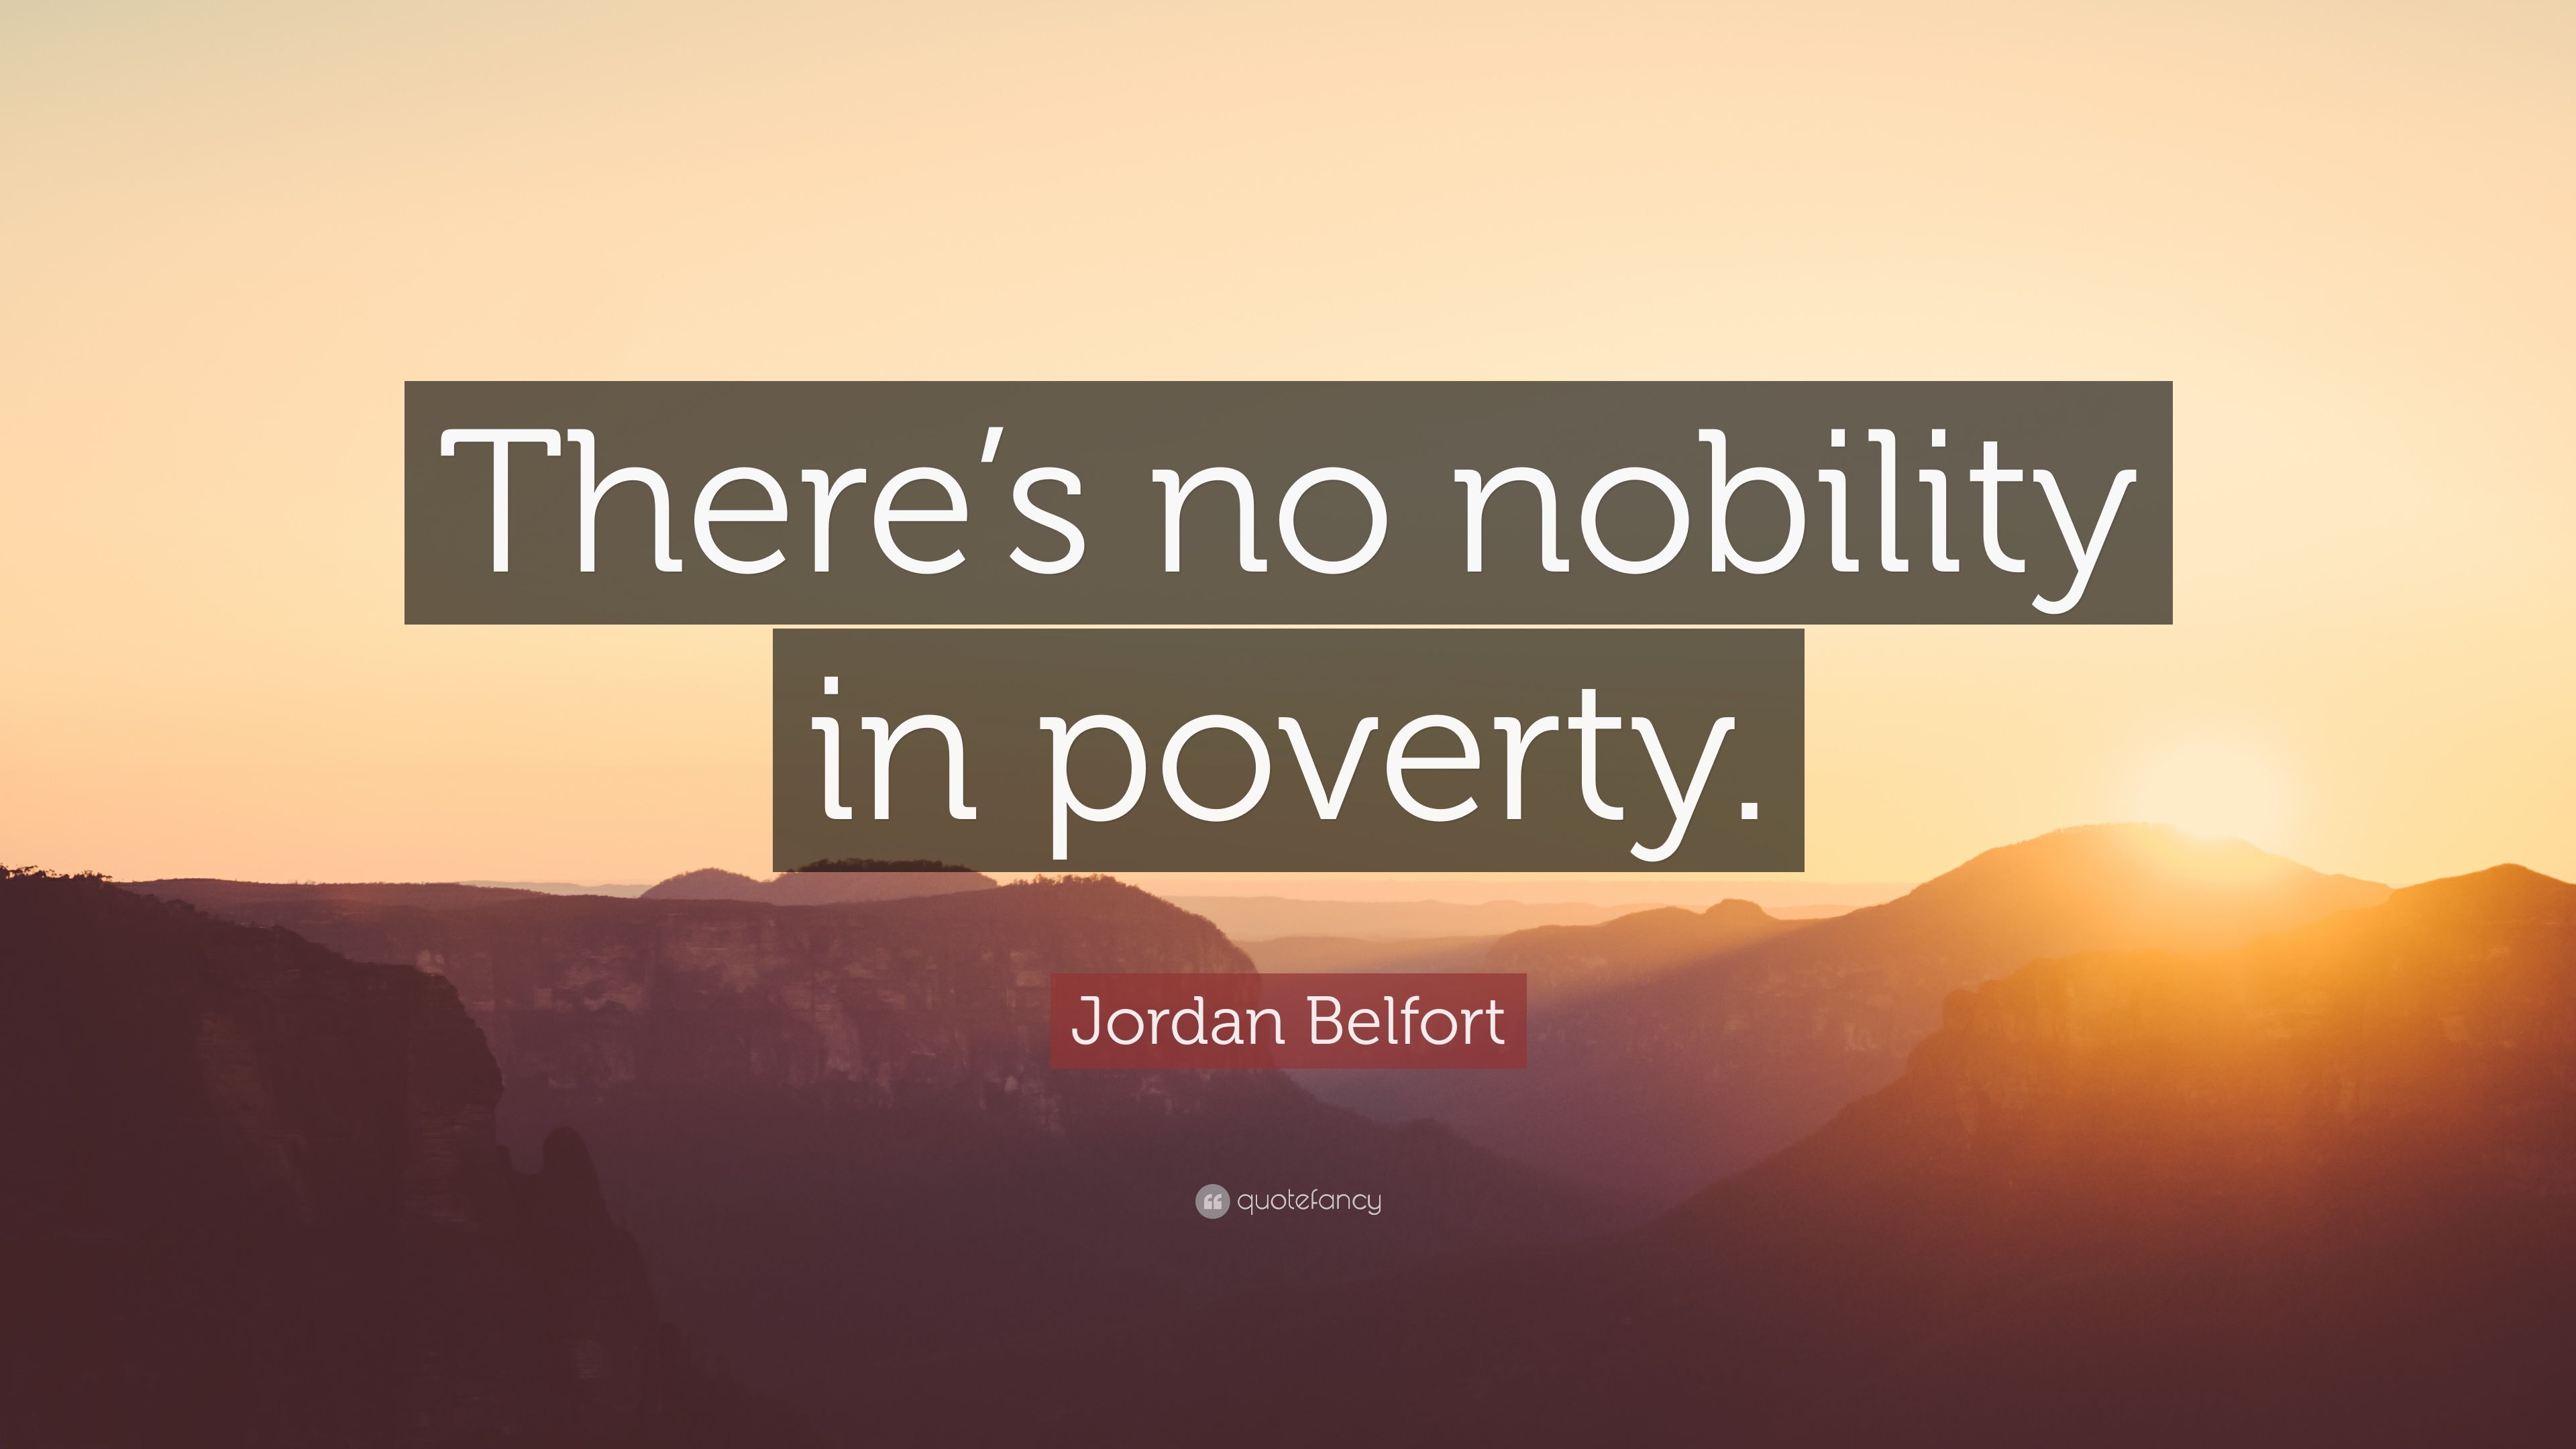 Jordan Belfort (The REAL Wolf of Wall Street) Quotes (23 wallpaper)